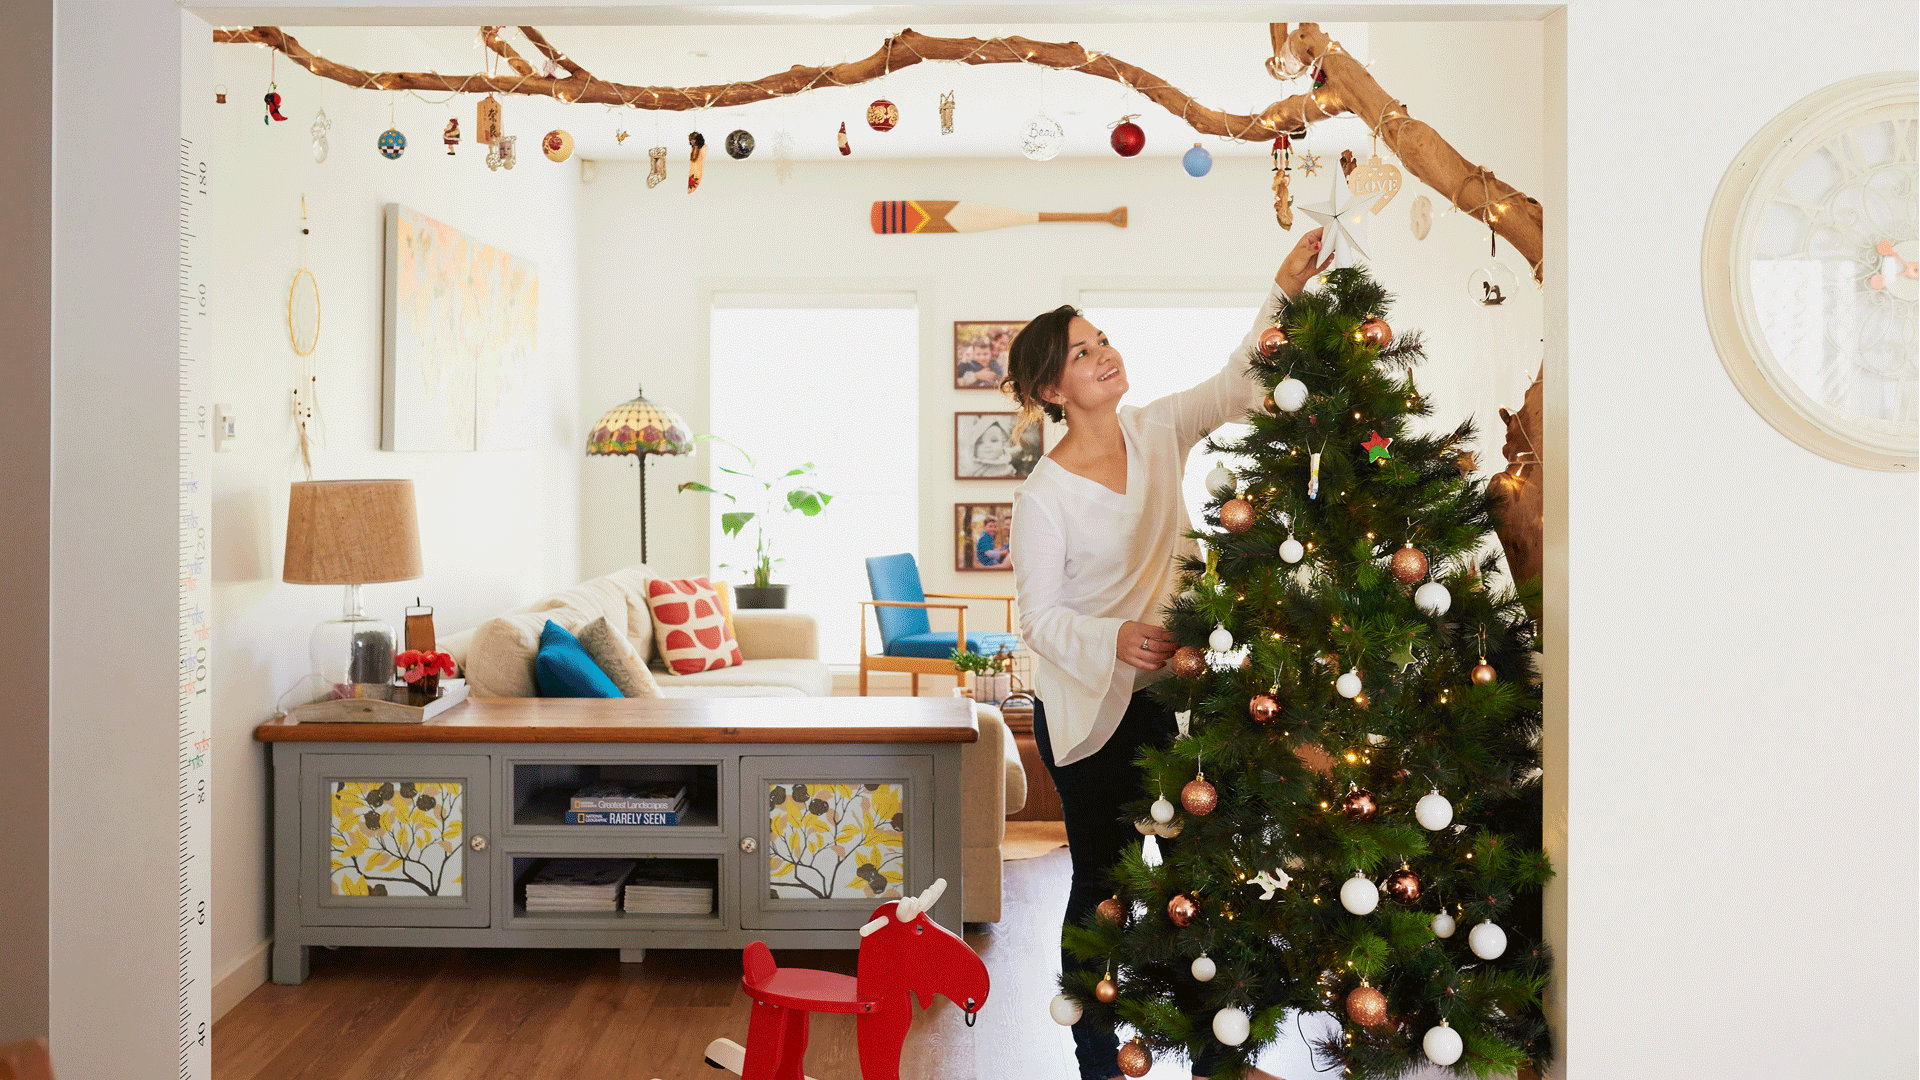 5 Kid-Friendly Christmas Decorating Ideas